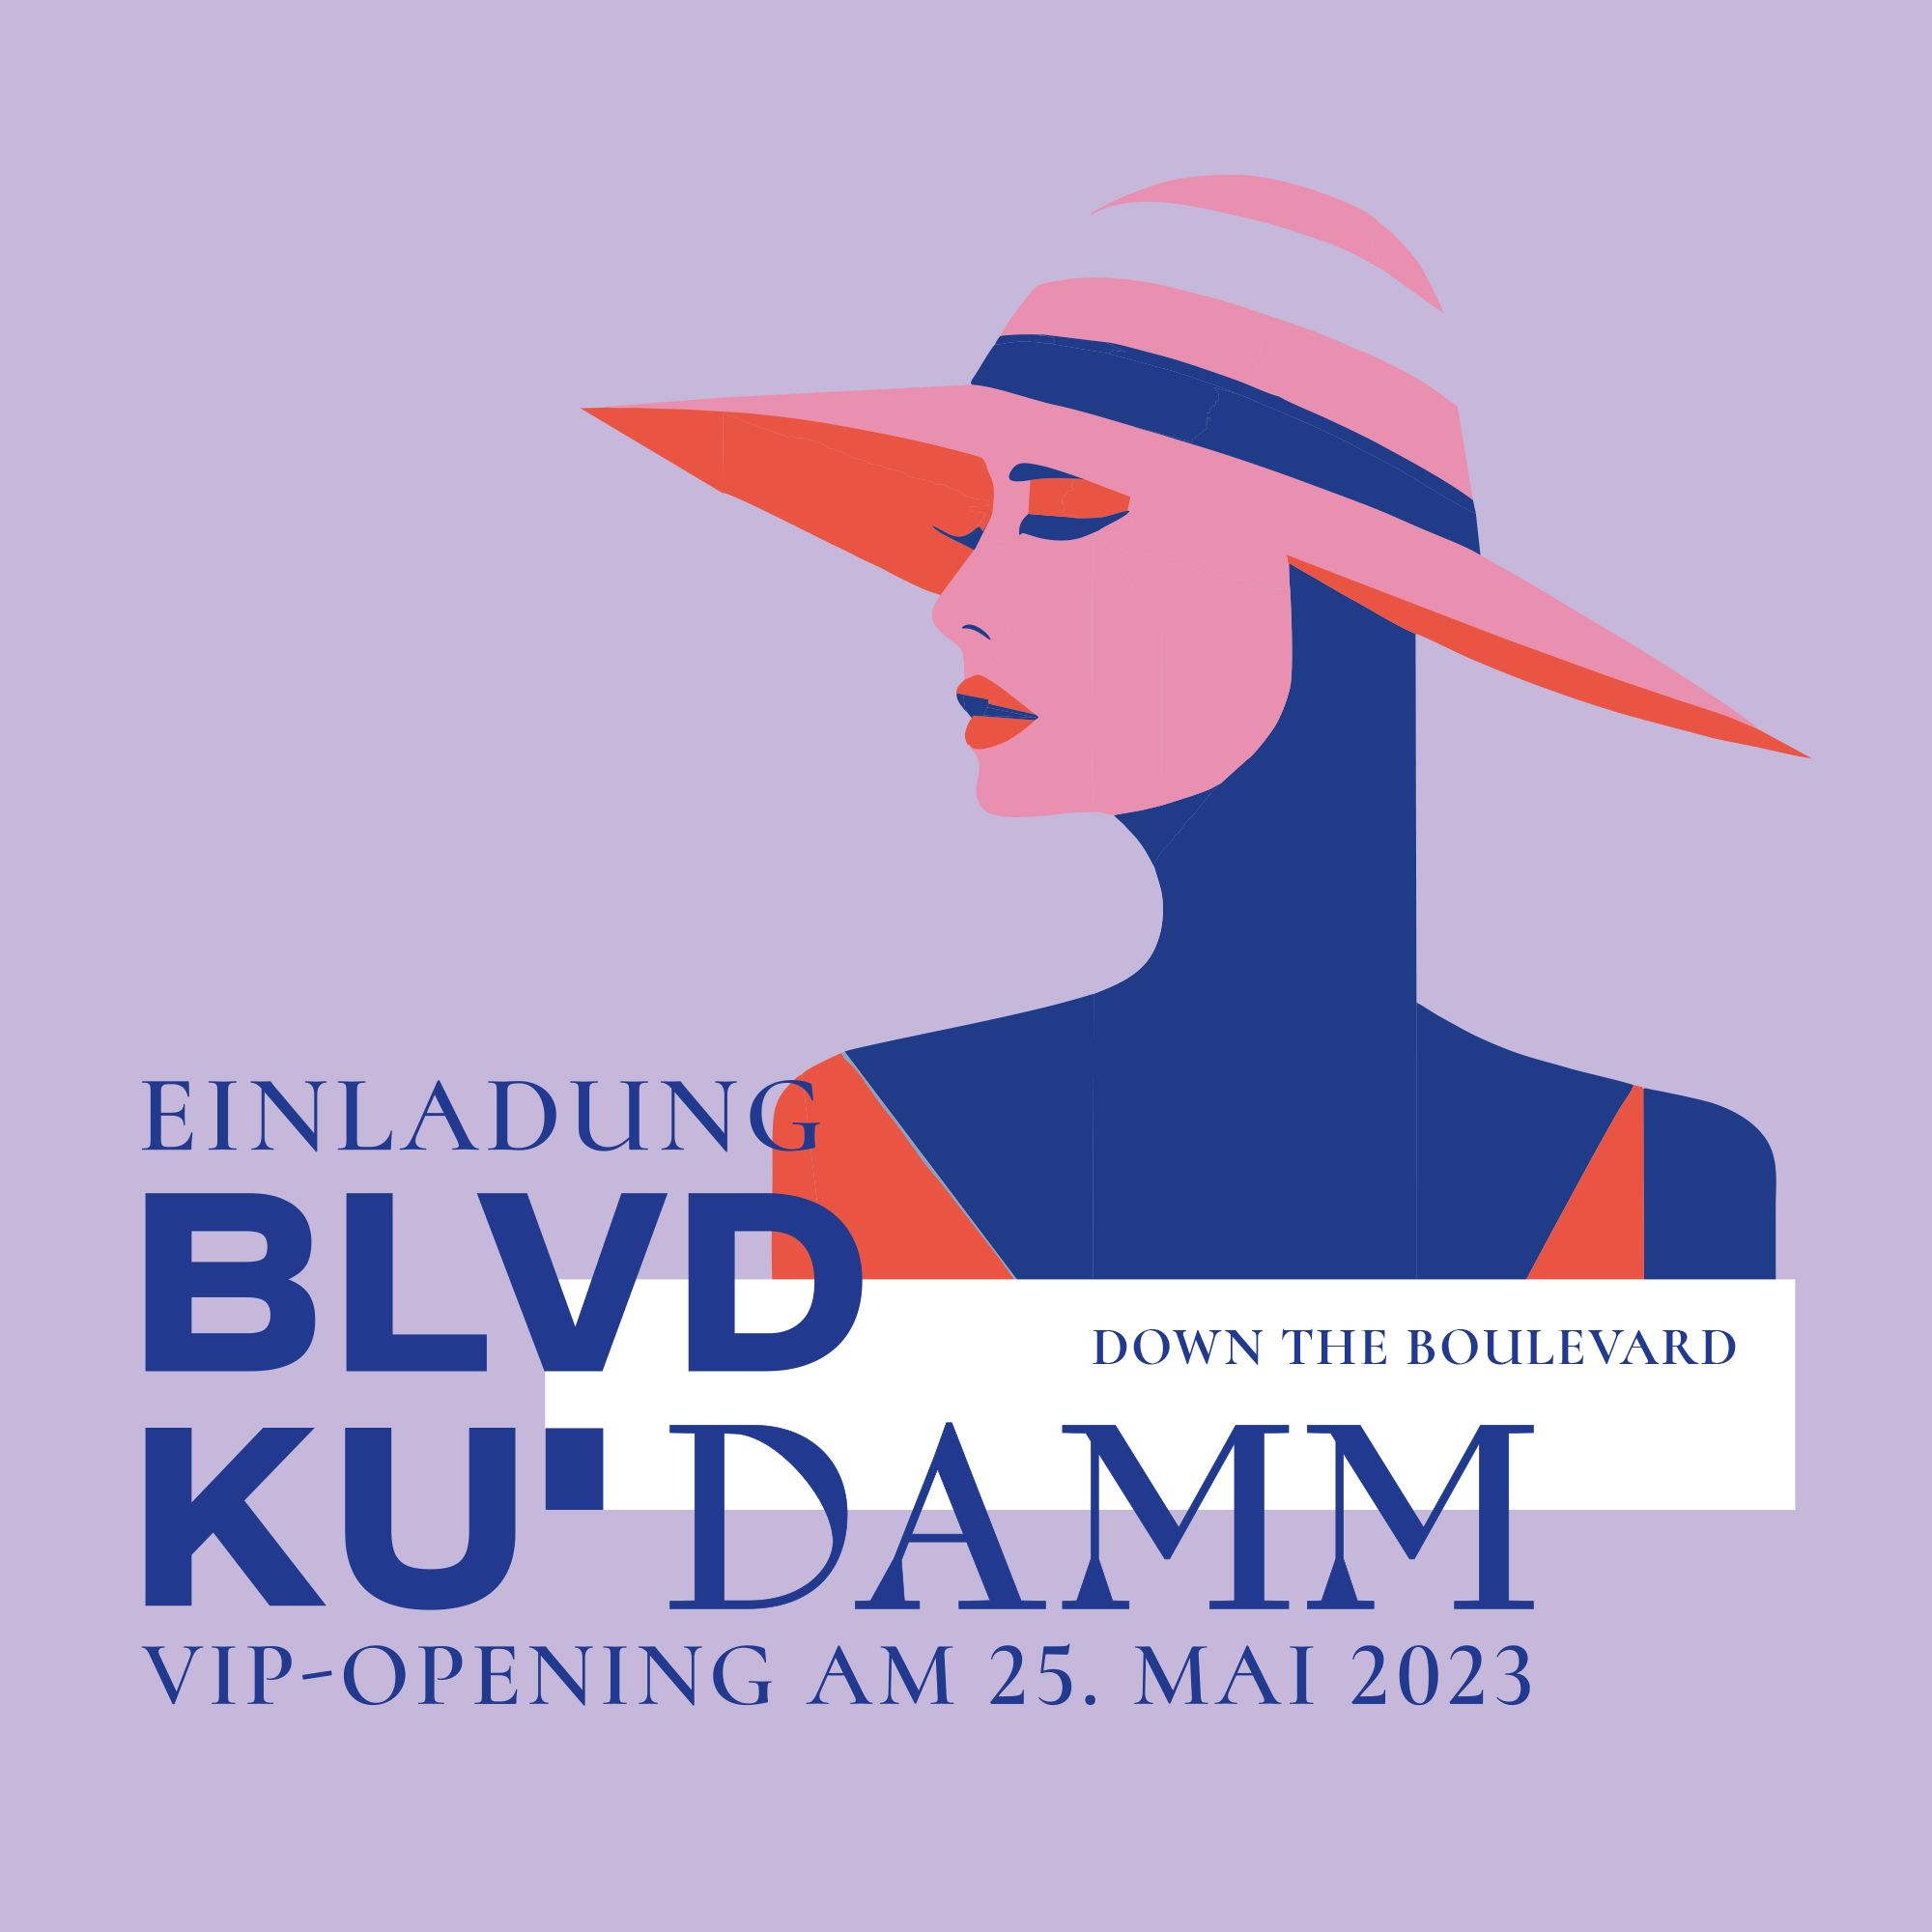 EINLADUNG zum exklusiven VIP-Opening “Down The Boulevard – LIVE” am 25. Mai 2023